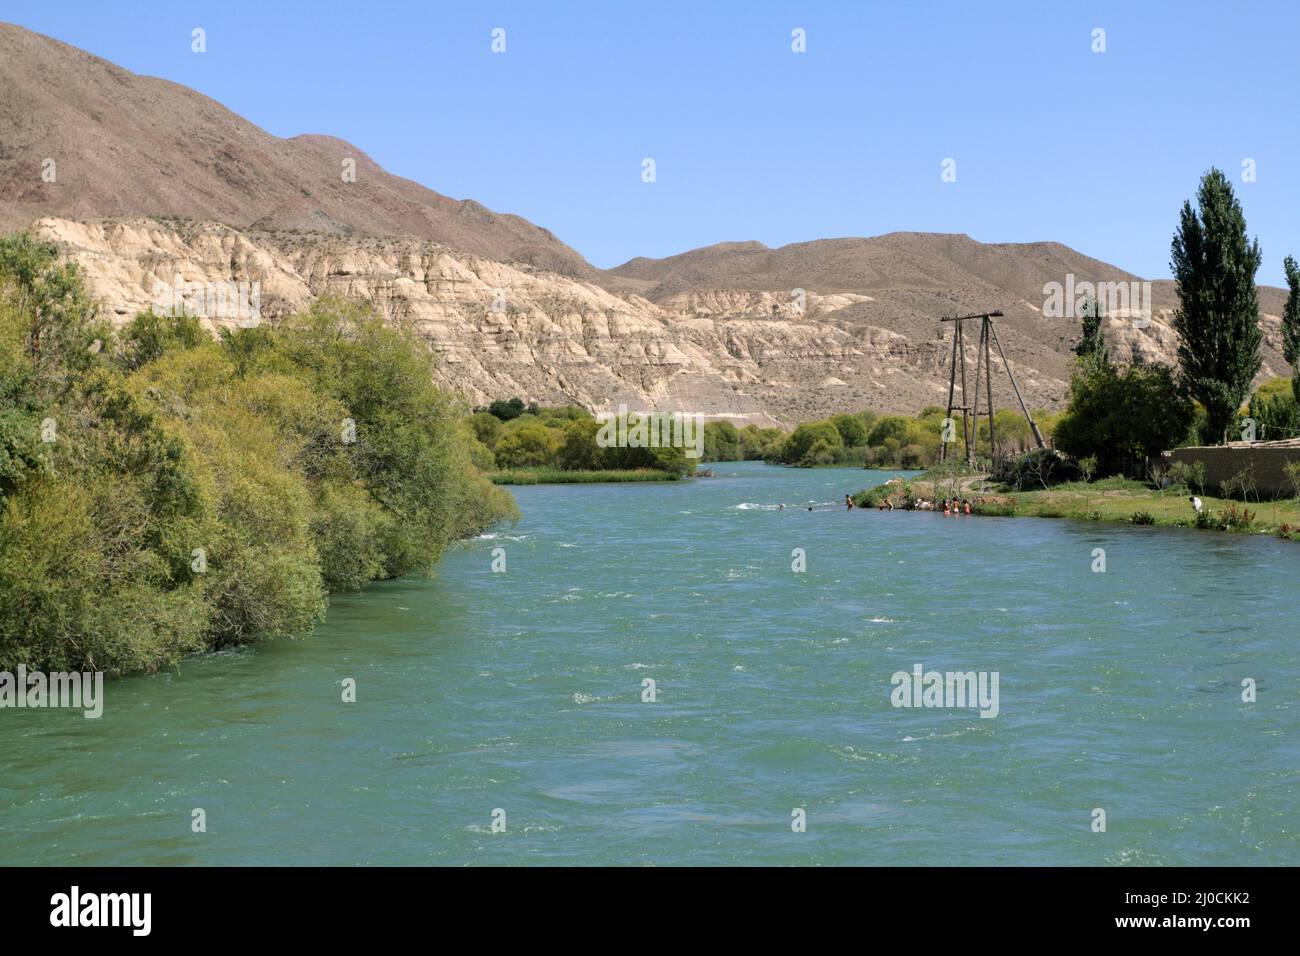 River Chuy (TschÃ¼i) at Tokmak, Kyrgyzstan Stock Photo